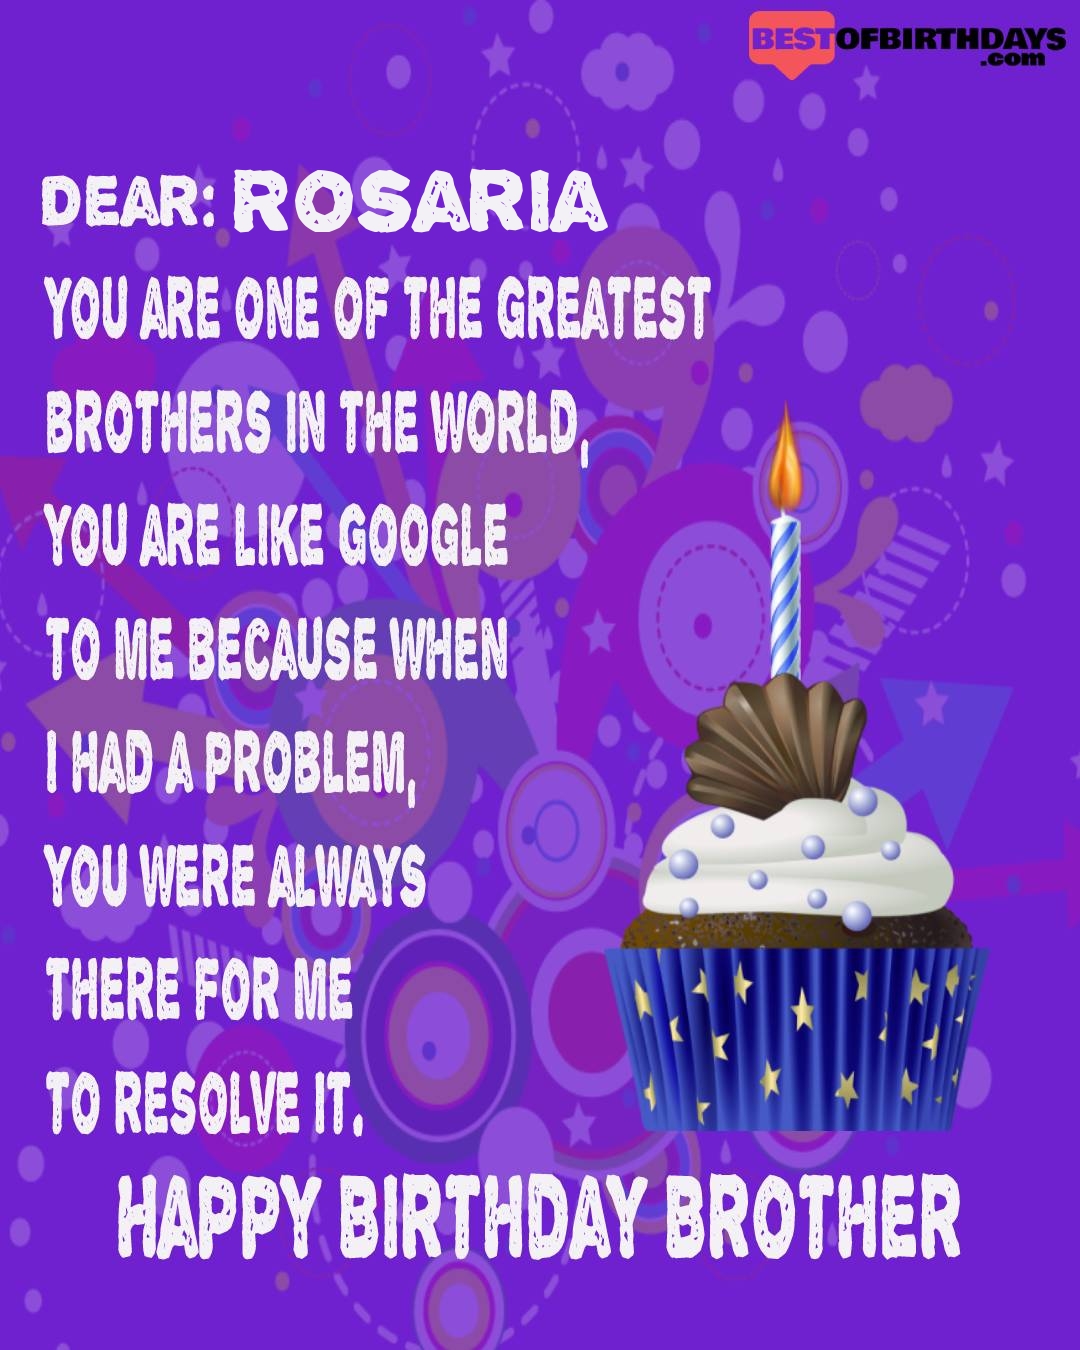 Happy birthday rosaria bhai brother bro